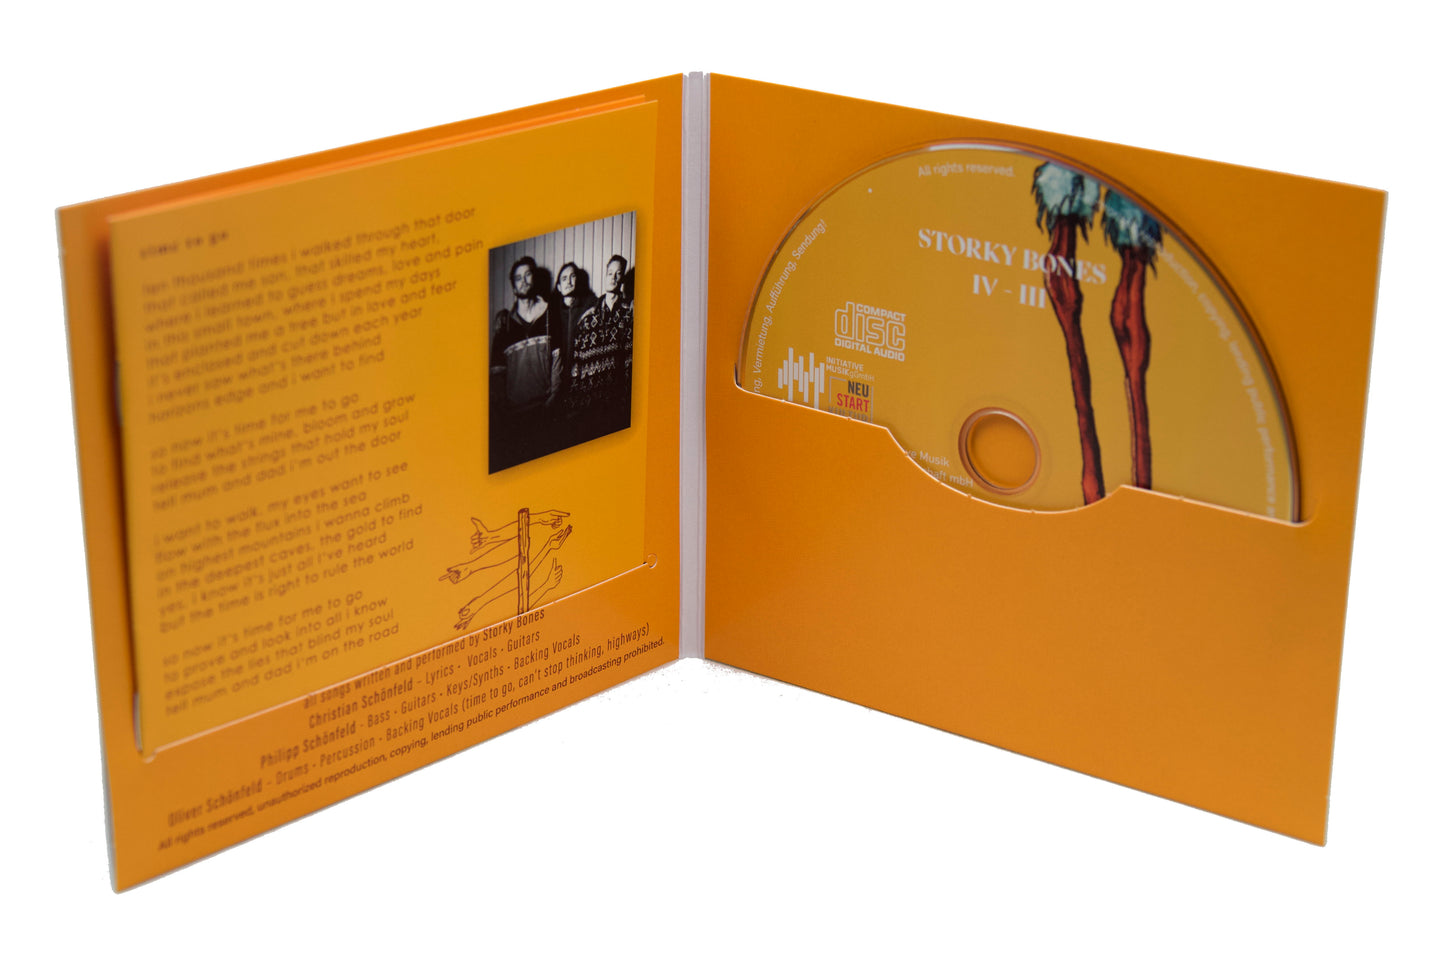 Storky Bones Album-CD "IV - III"